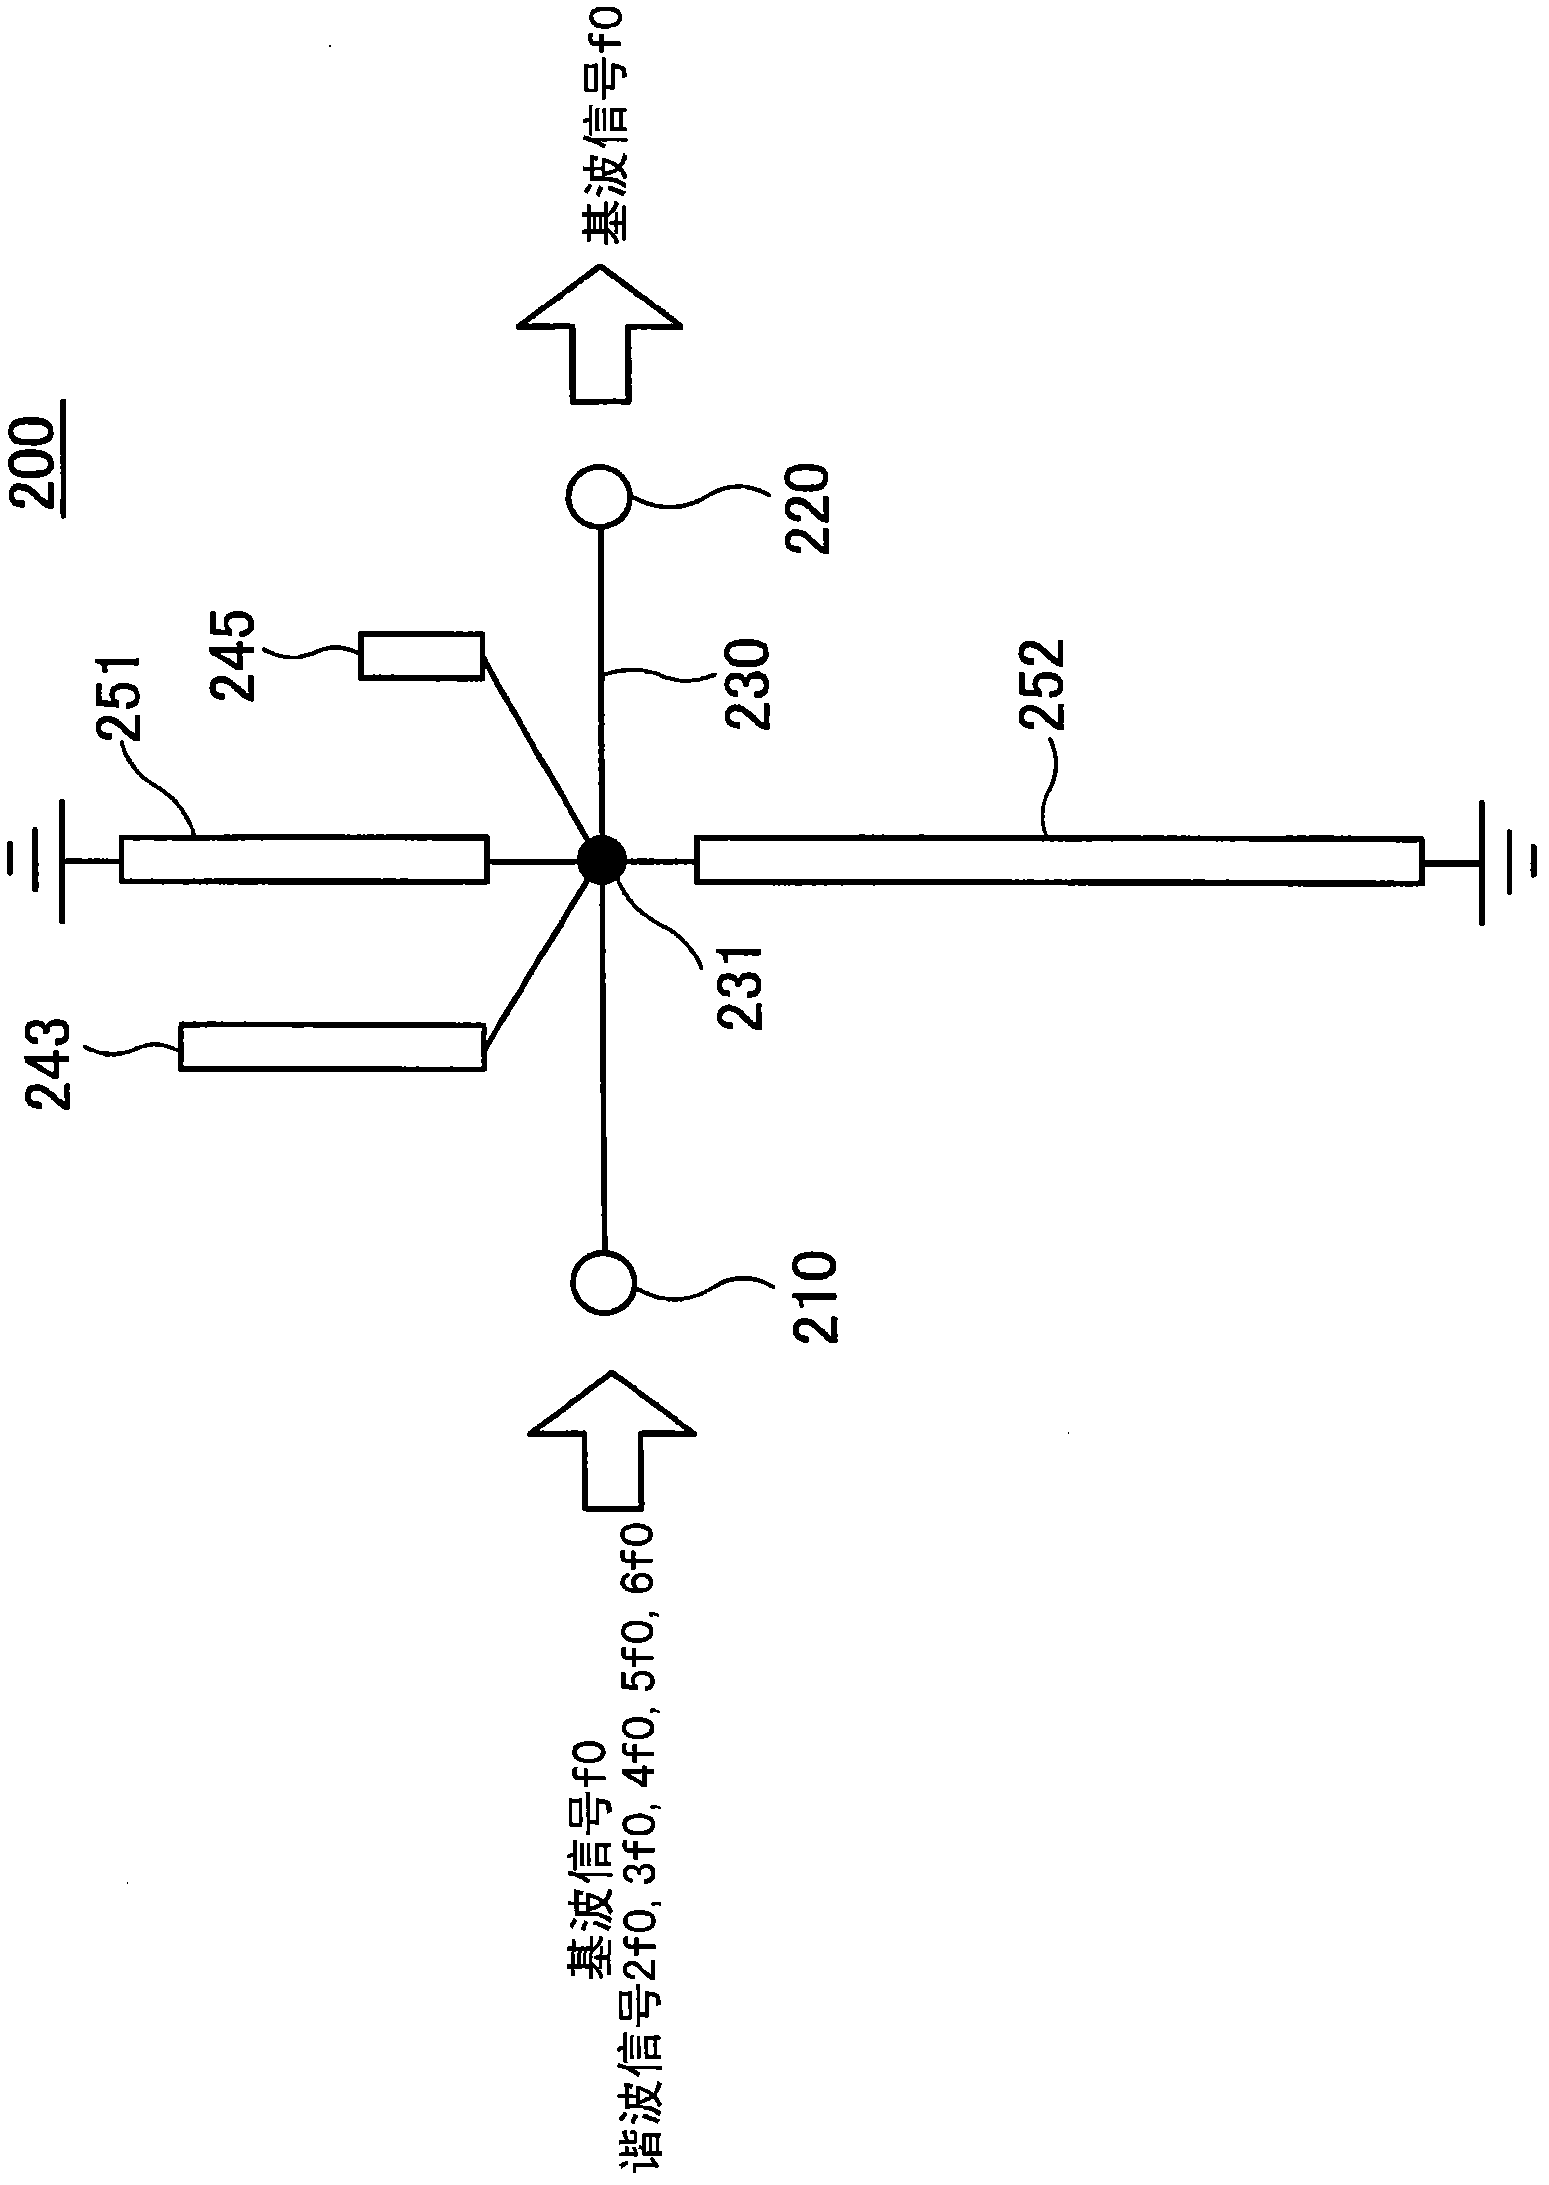 Filter, transmitter-receiver, and amplifying circuit